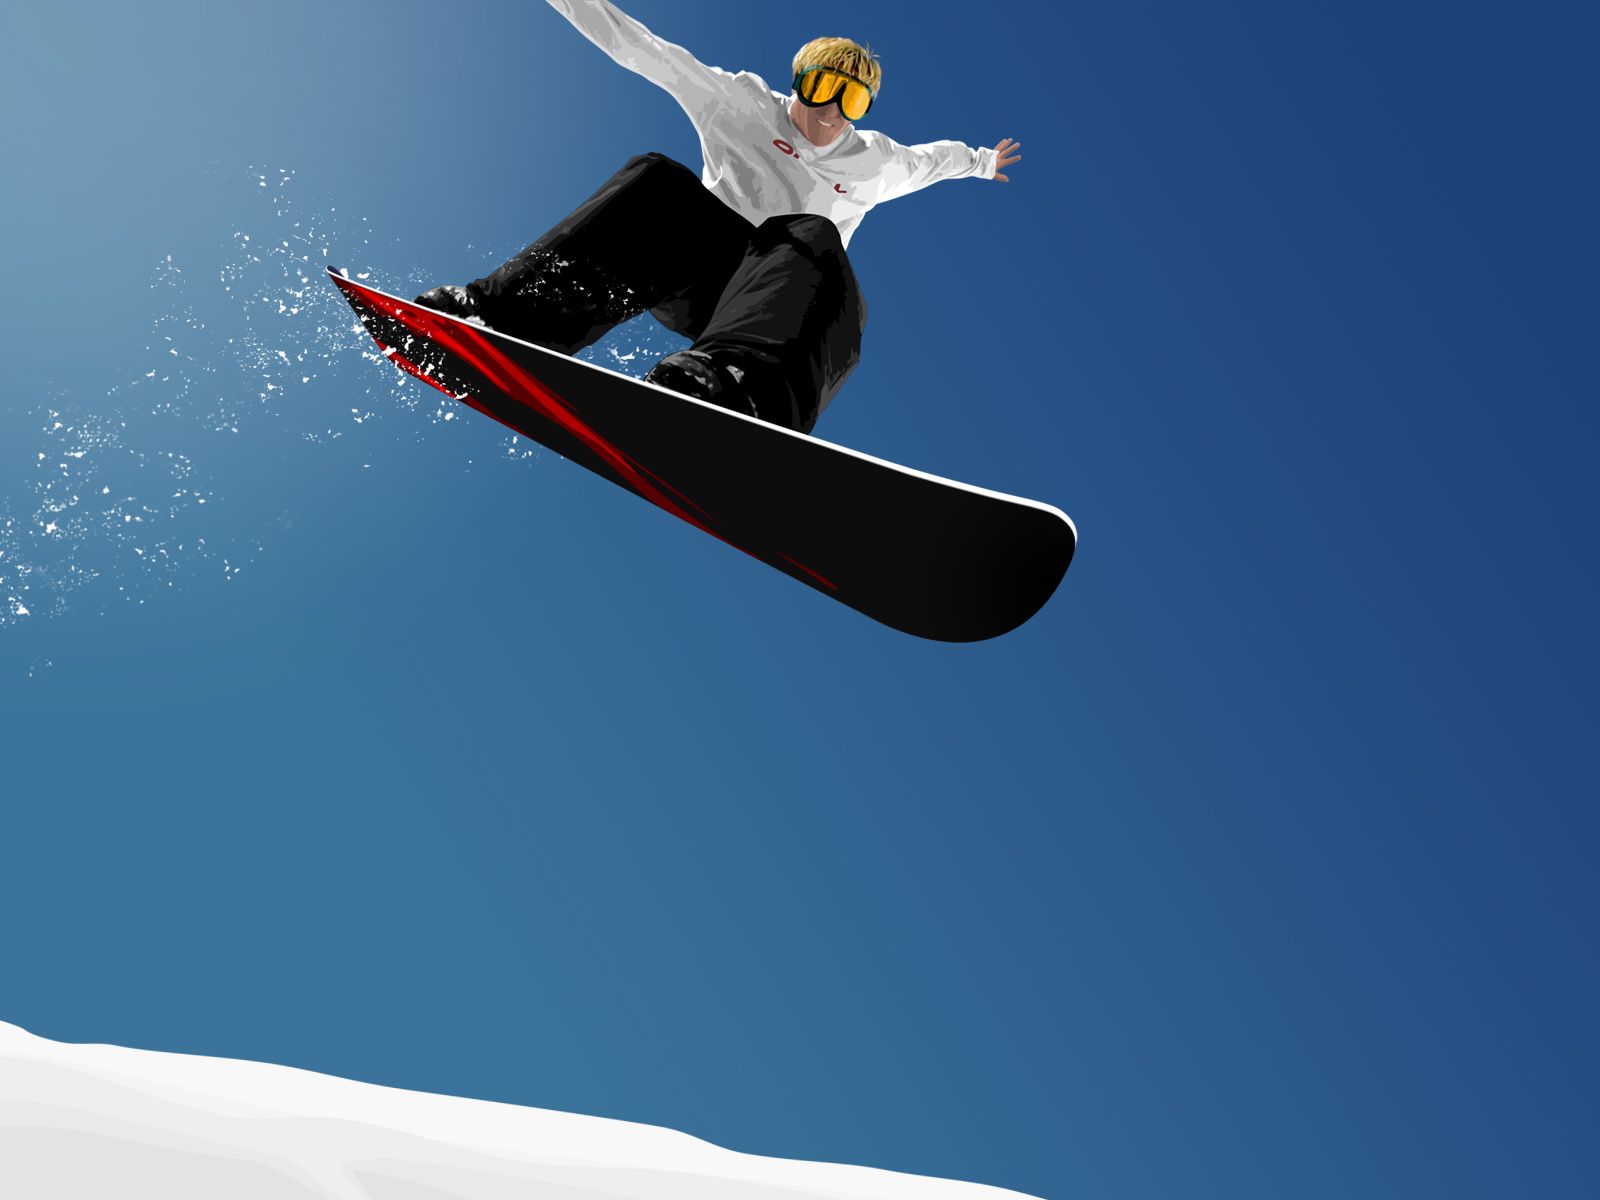 Snowboarding Wallpaper Hd | Wallpaper Gallery